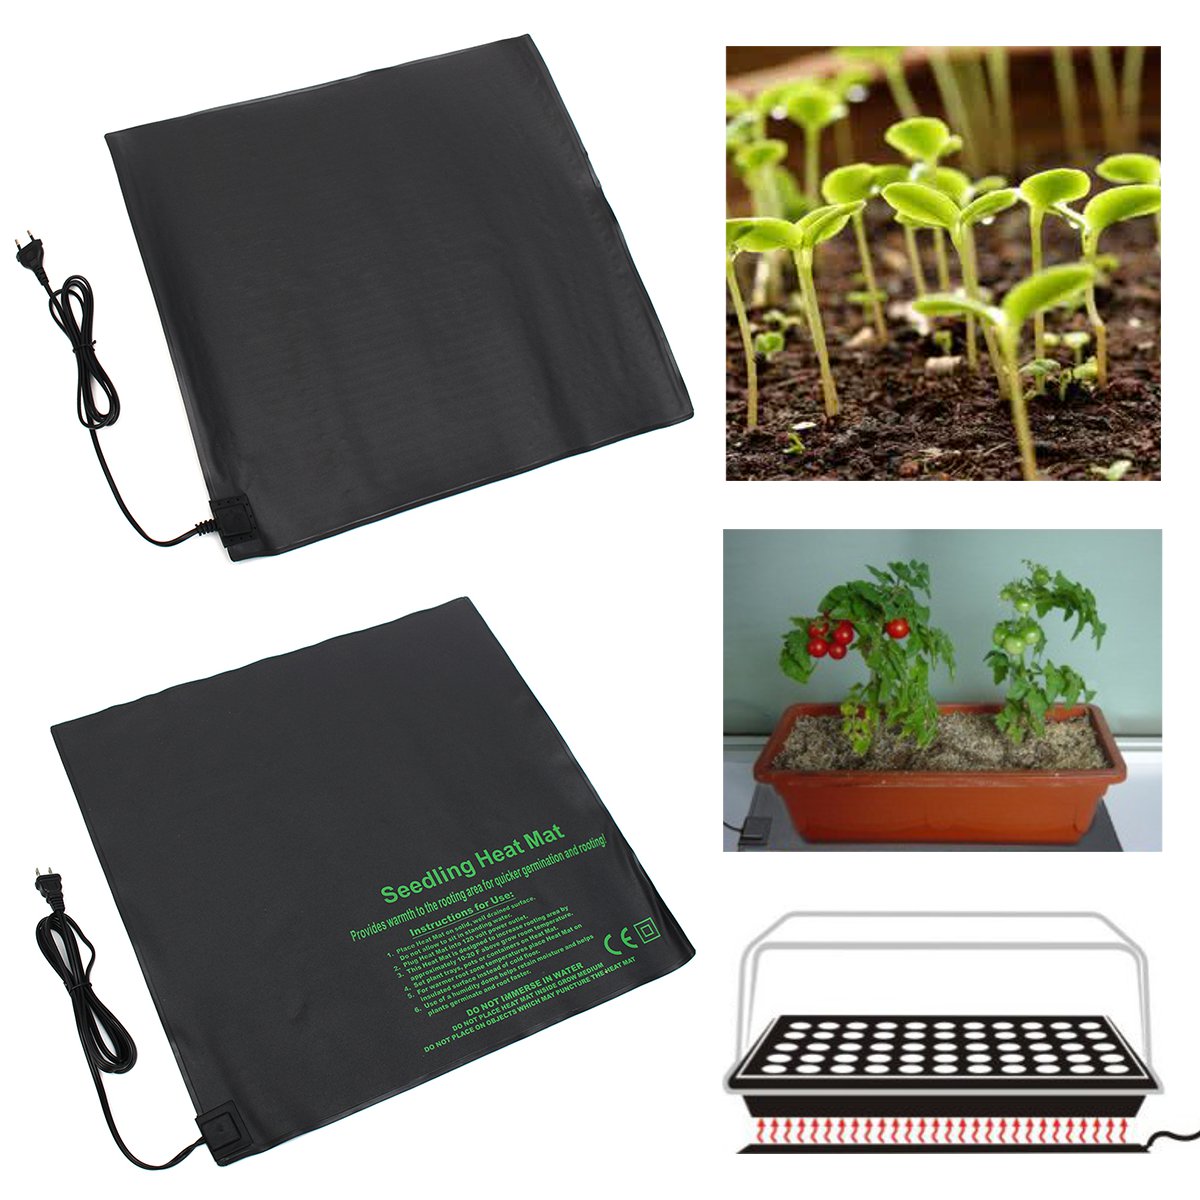 24 x 52cm Waterproof Seedling Heat Mat Plant Seed Germination Propagation Clone Starter Warm Hydroponic Heating Pad